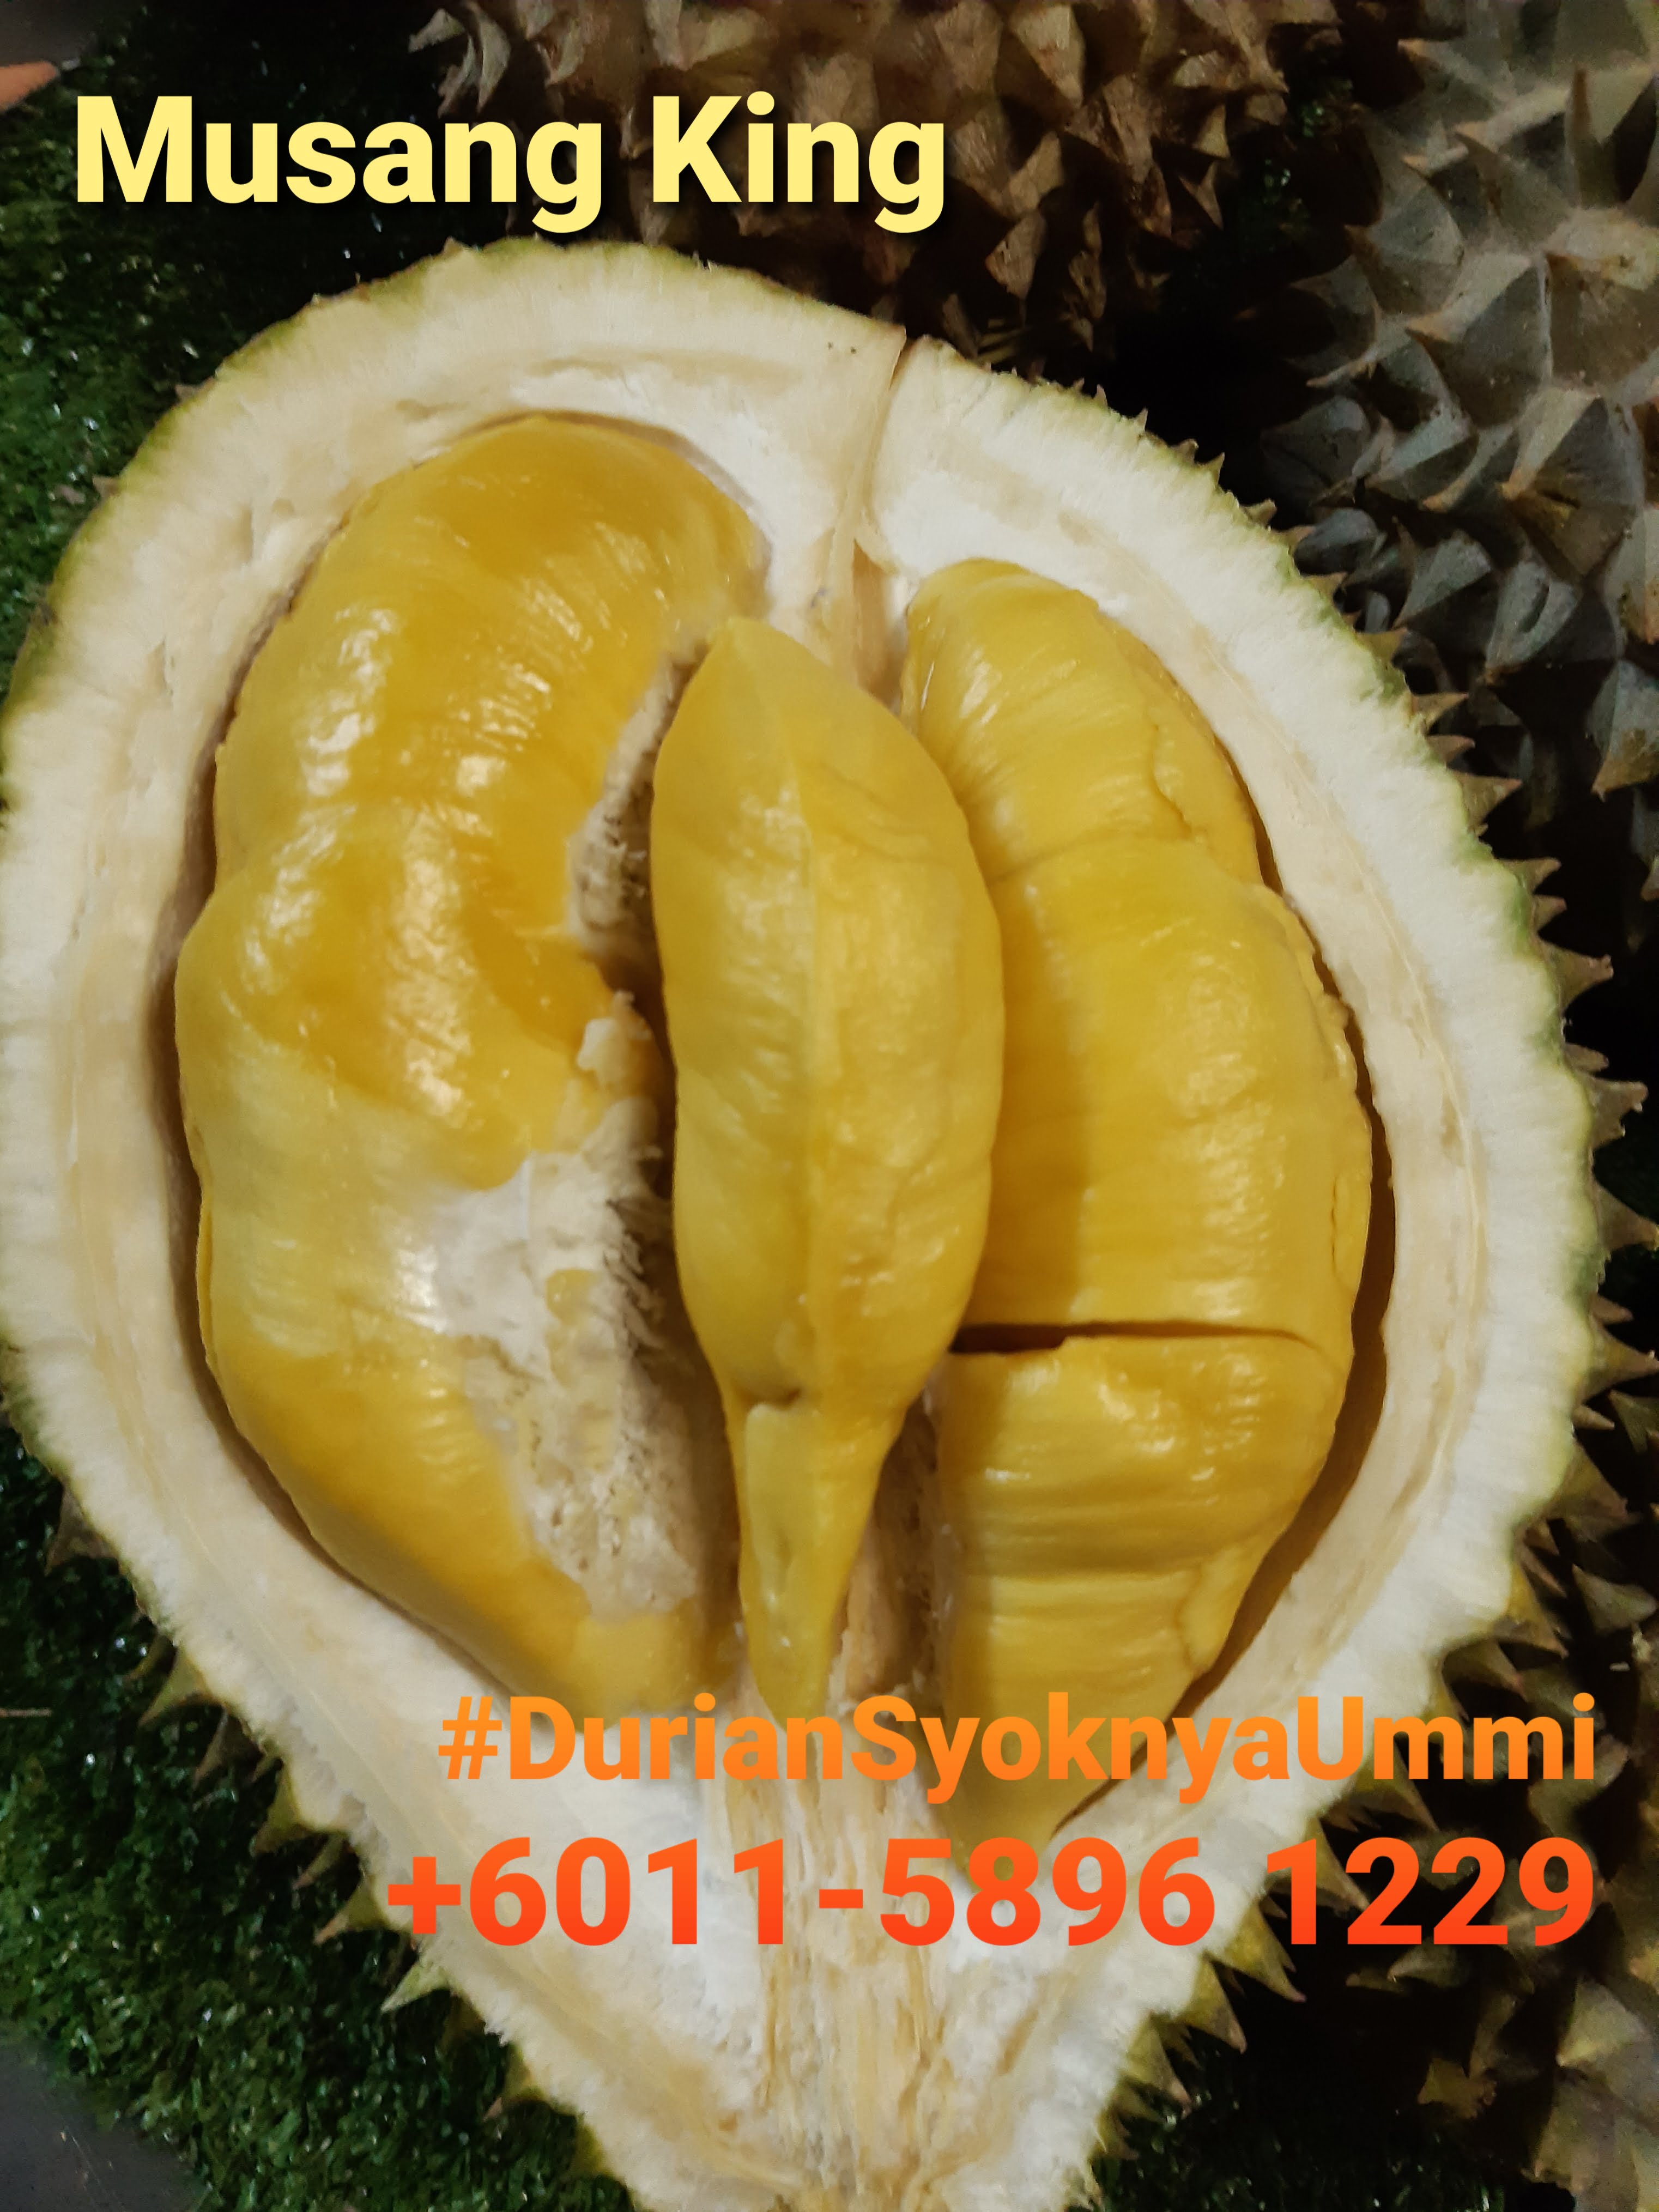 Tempat makan Musang King di Muar, Durian murah Muar 2020